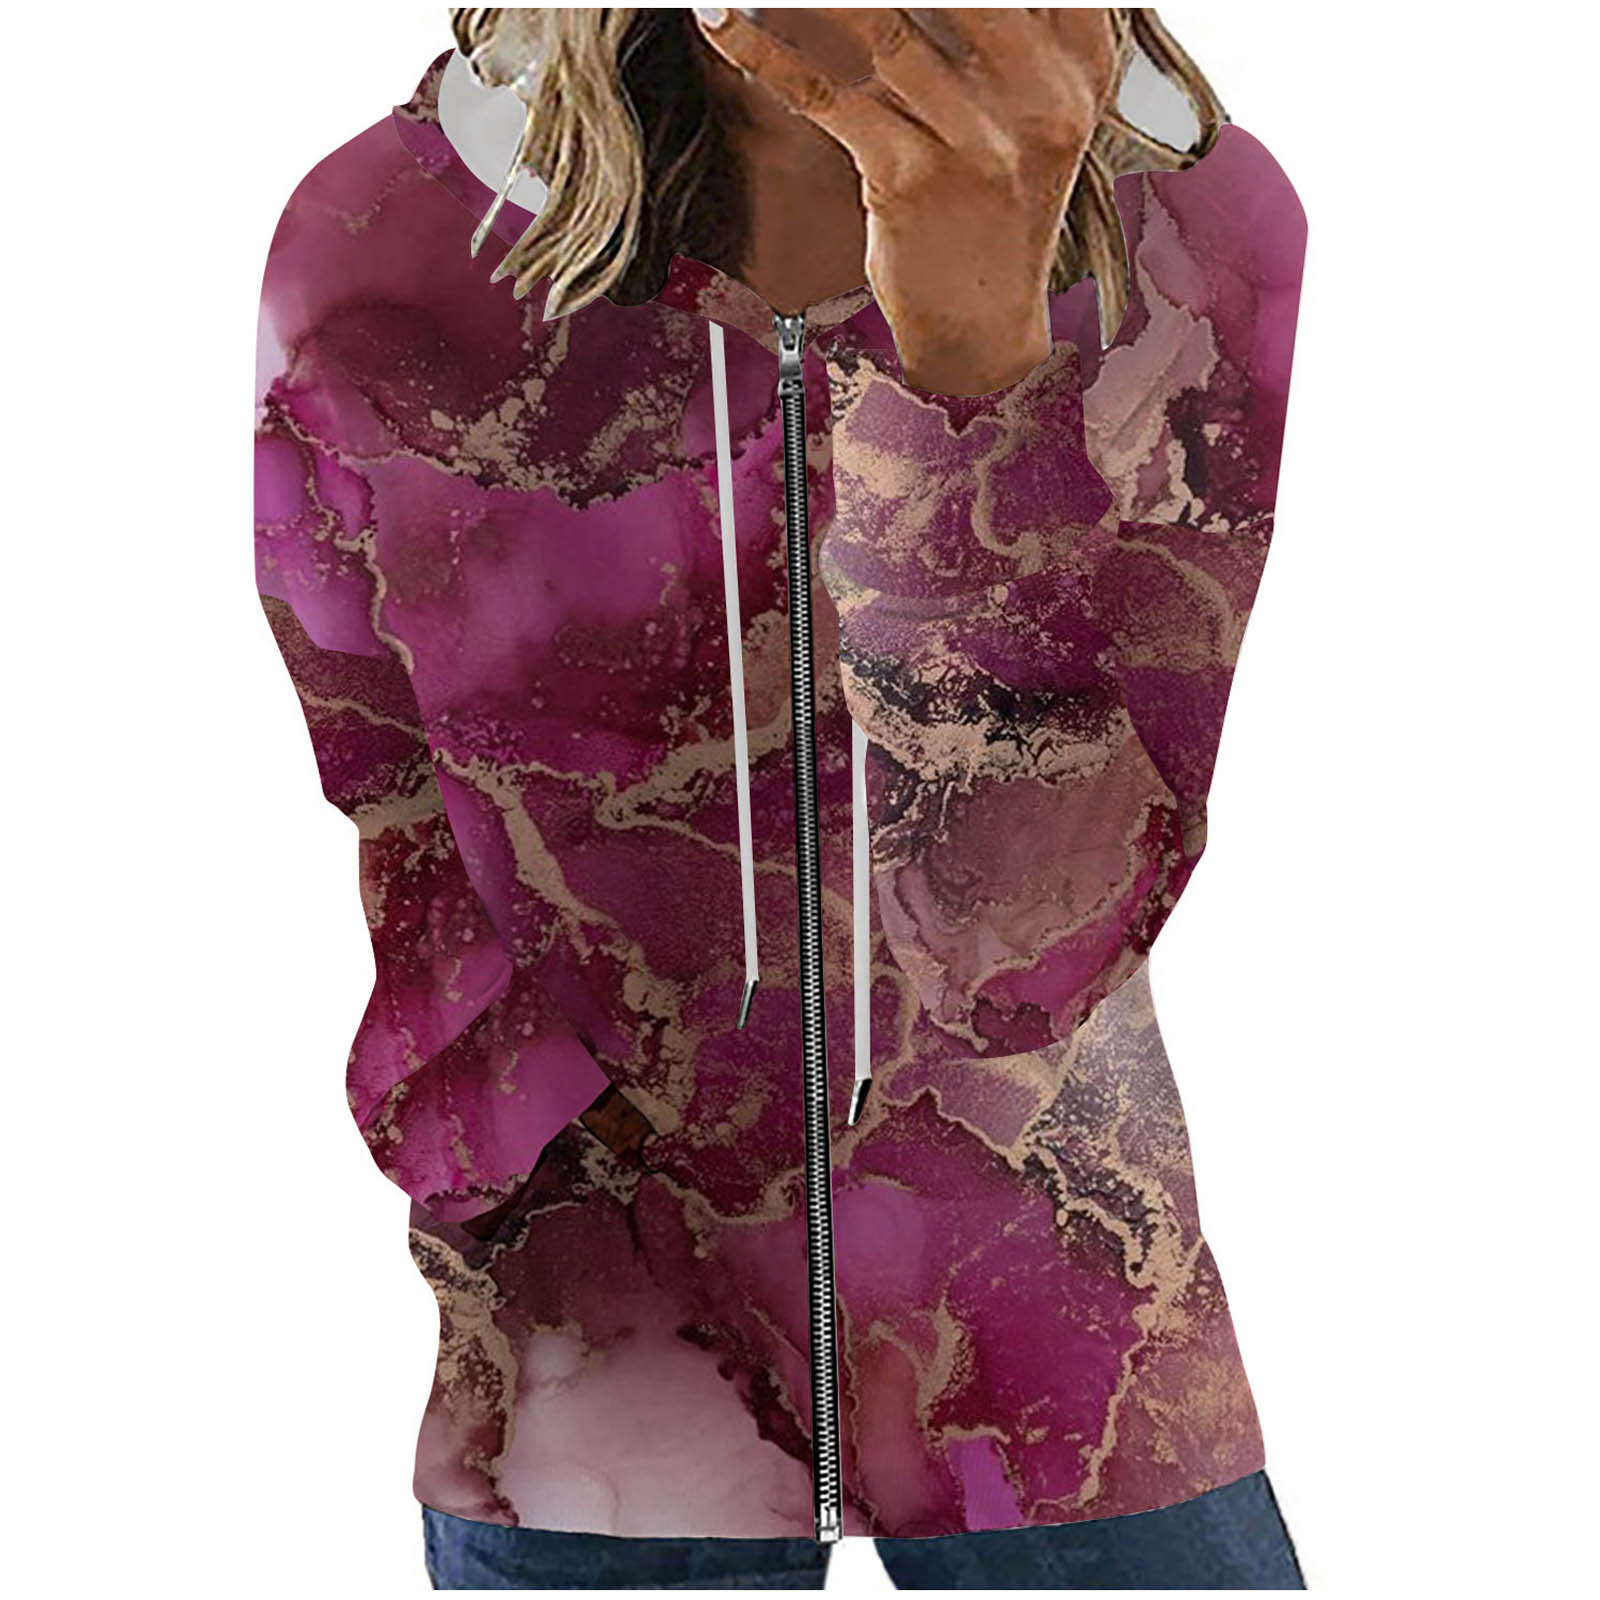 YFPWM Women's Sweaters Fall 2022 Cycling Jacket Drape Light Cardigan Wrap Sweater Mid Long Denim Jacket Trucker Jacket Casual Loose Coat - image 1 of 4